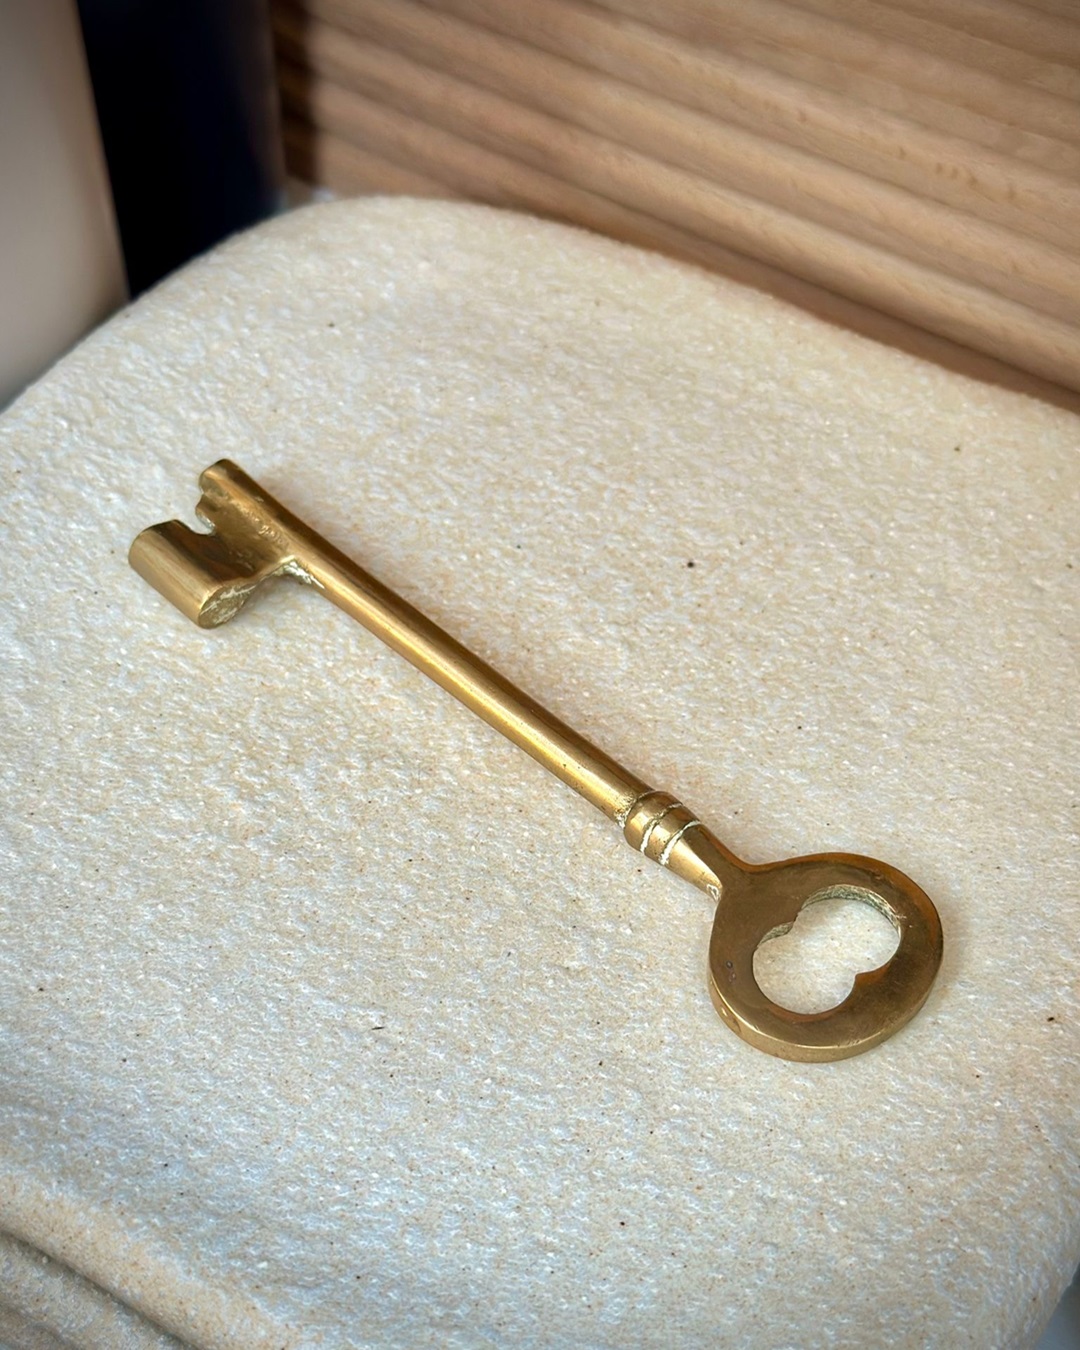 Brass key on white slab plate